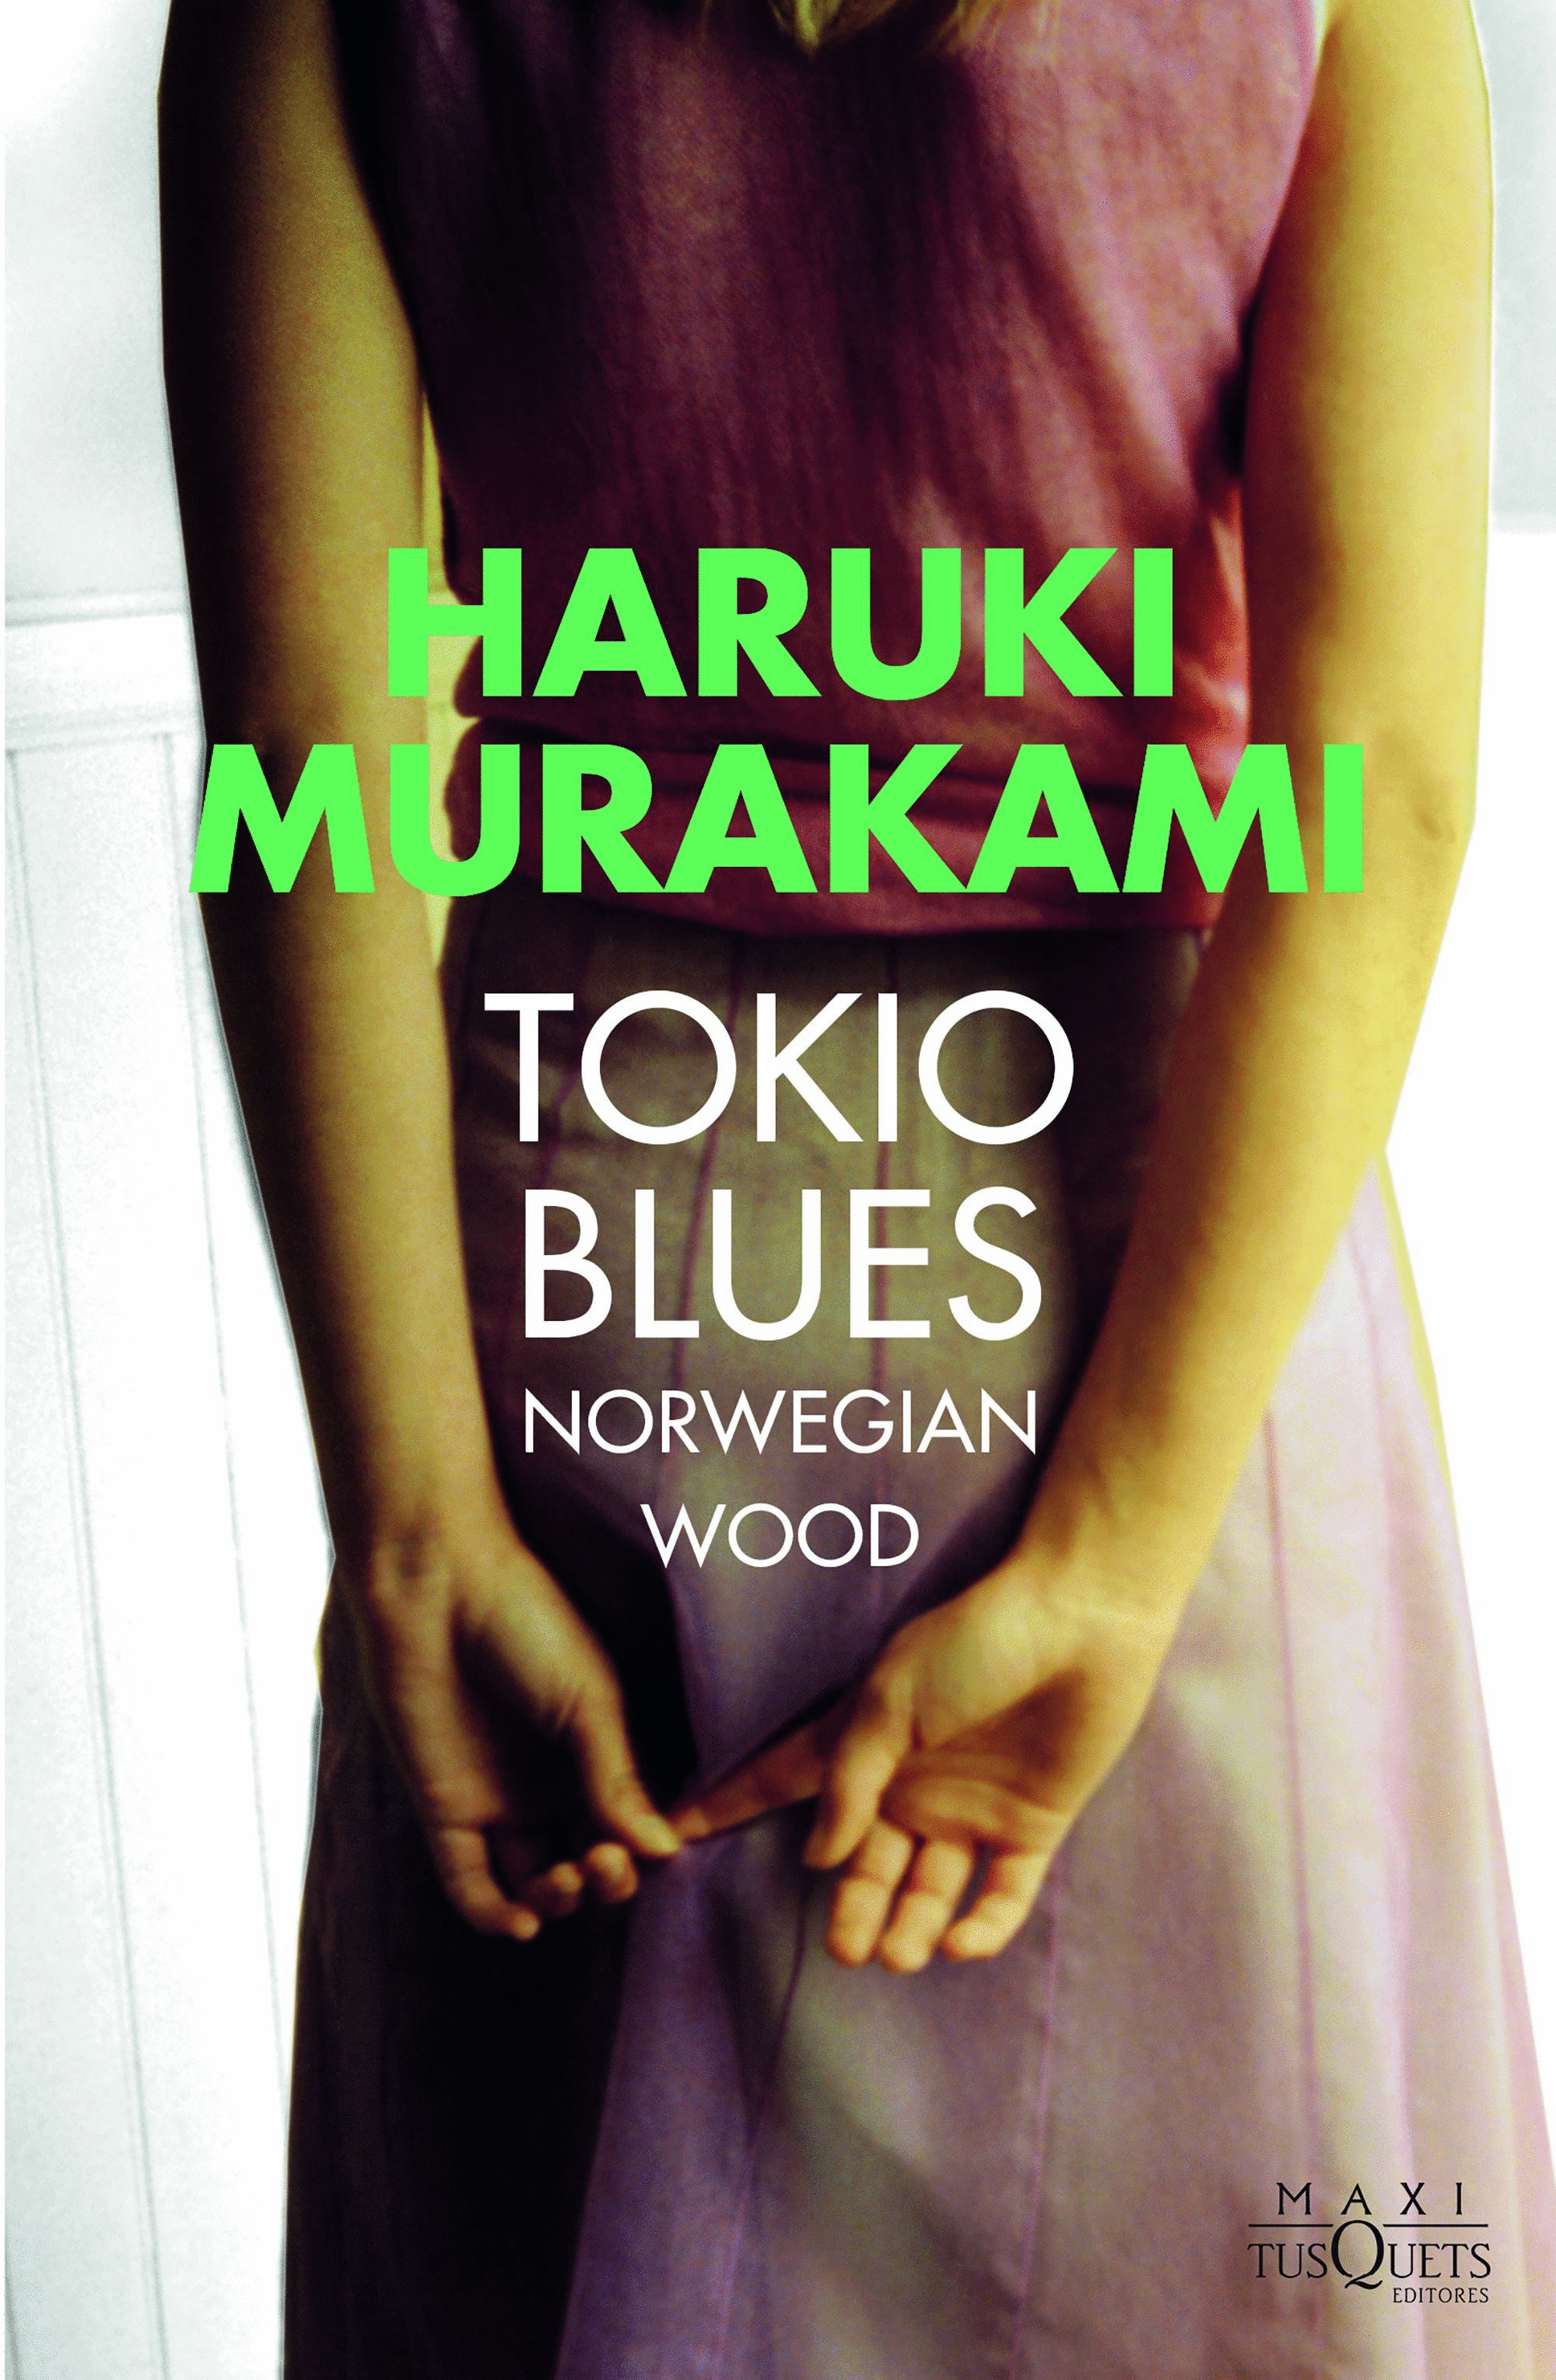 TOKIO BLUES: NORWEGIAN WOOD